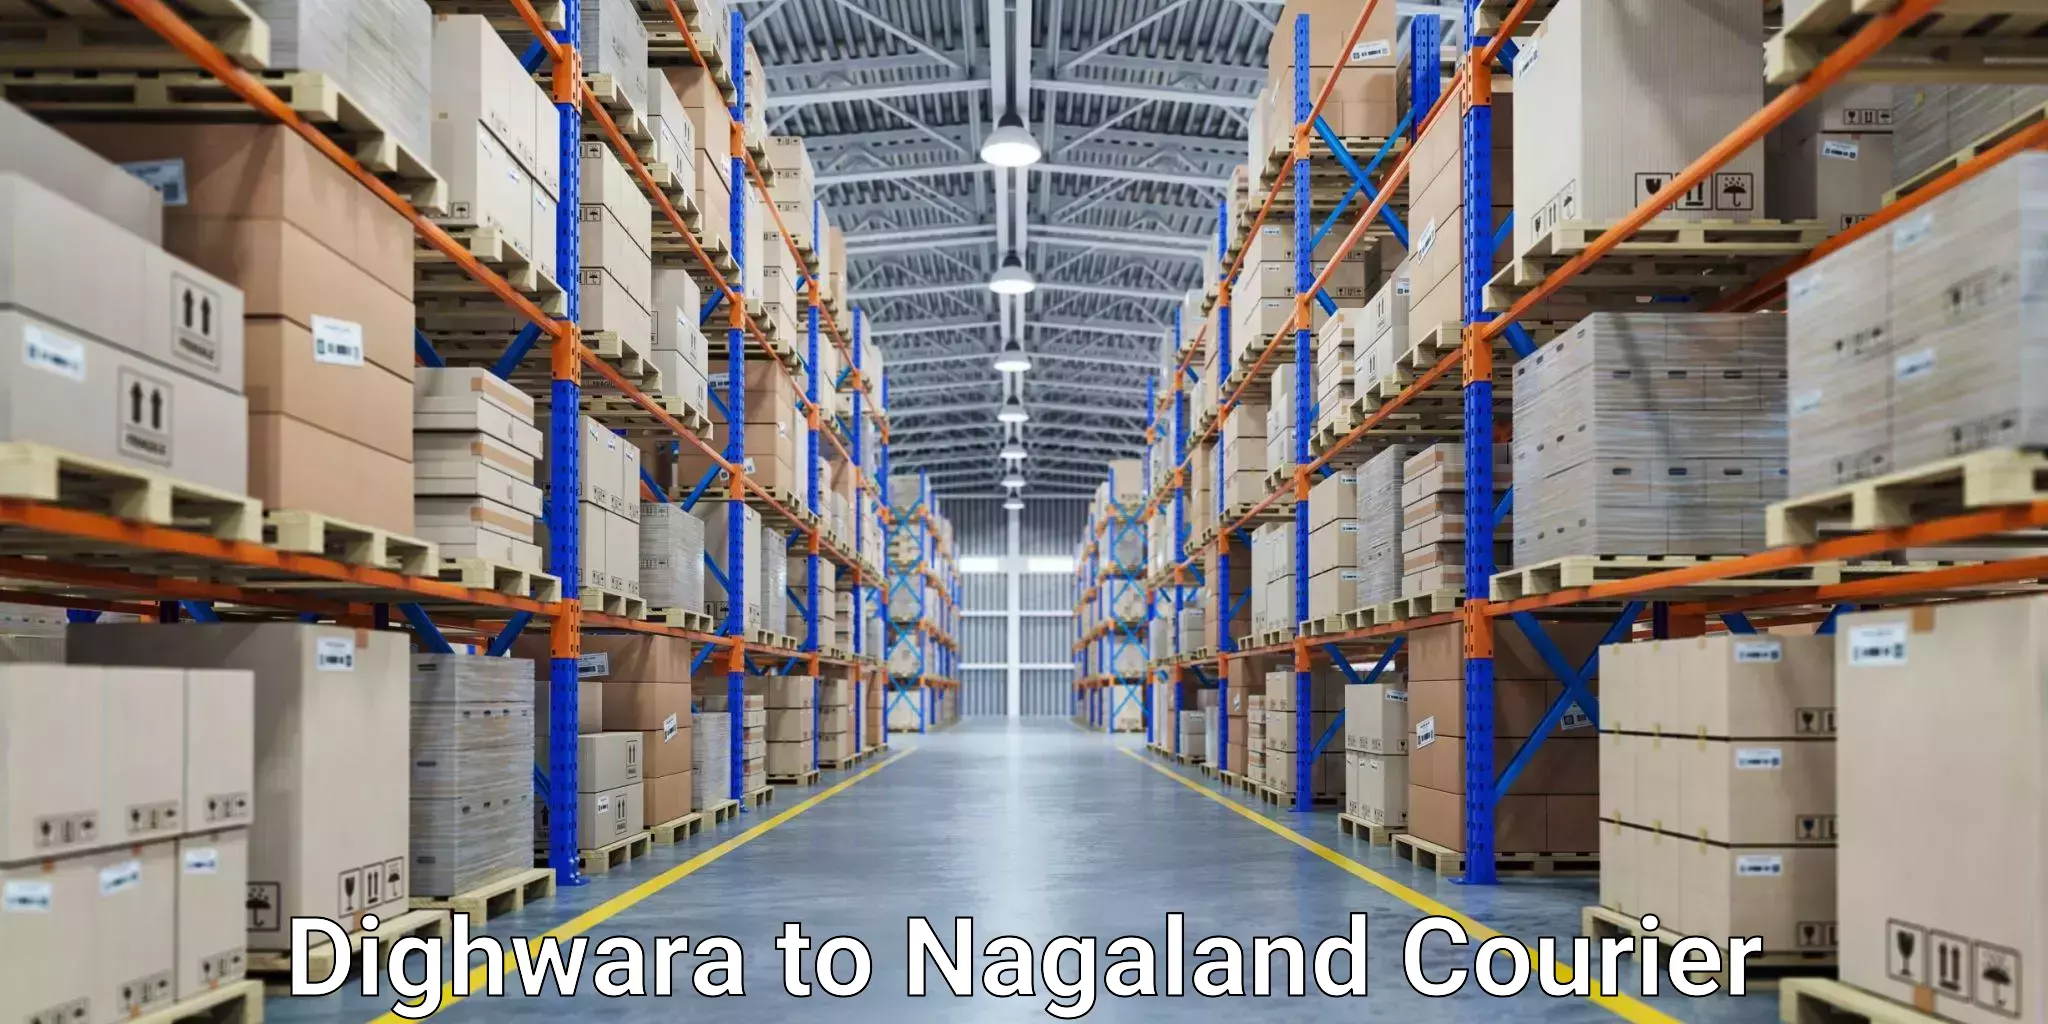 Express delivery network Dighwara to Nagaland